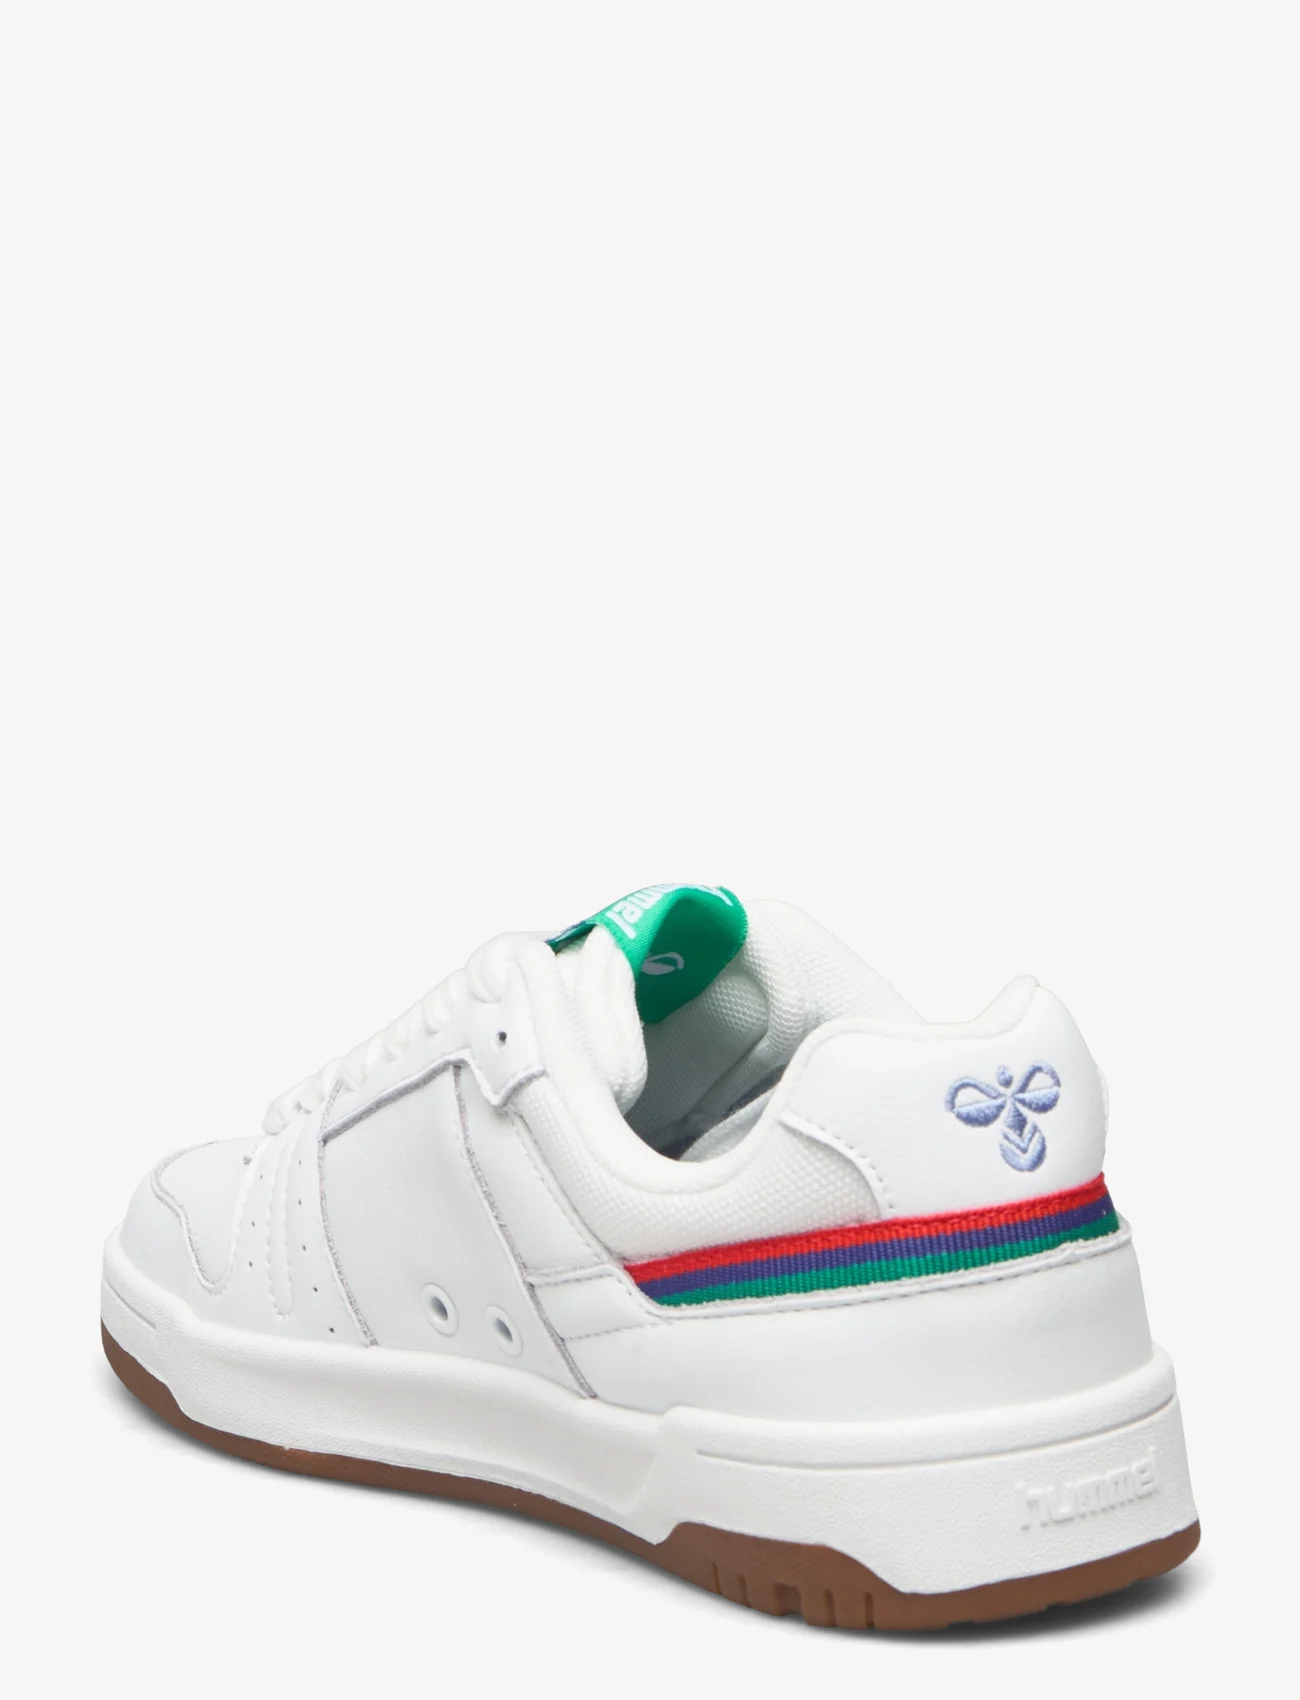 Hummel - STOCKHOLM LX-E ARCHIVE - niedrige sneakers - white/virids - 1